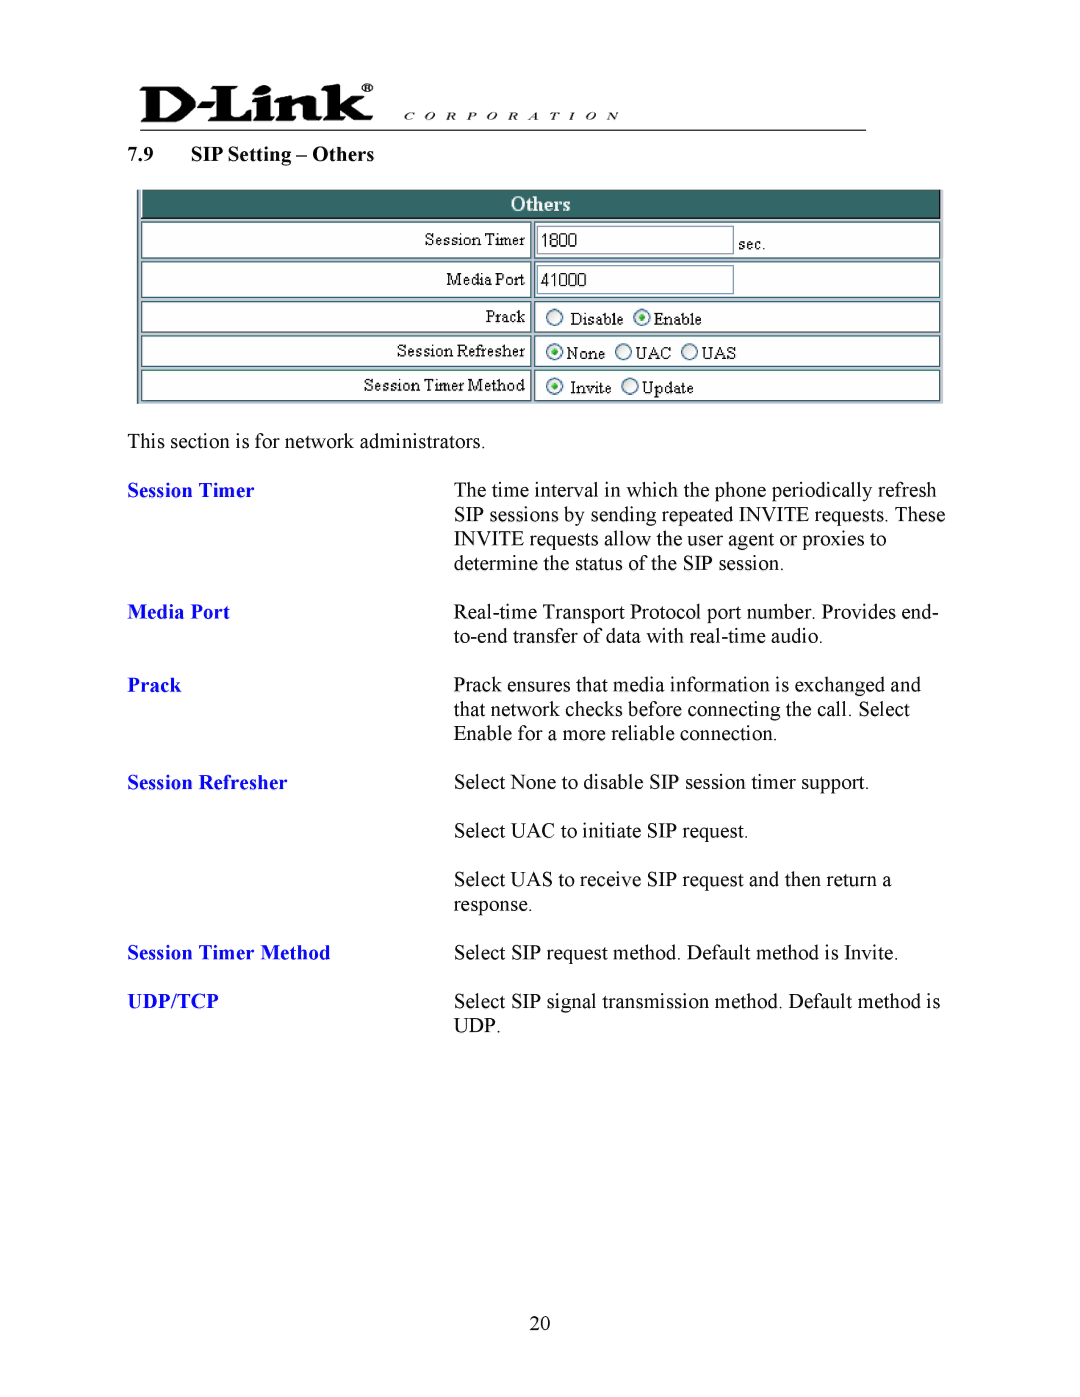 D-Link DPH-140S manual Media Port, Prack, Session Refresher, Session Timer Method 